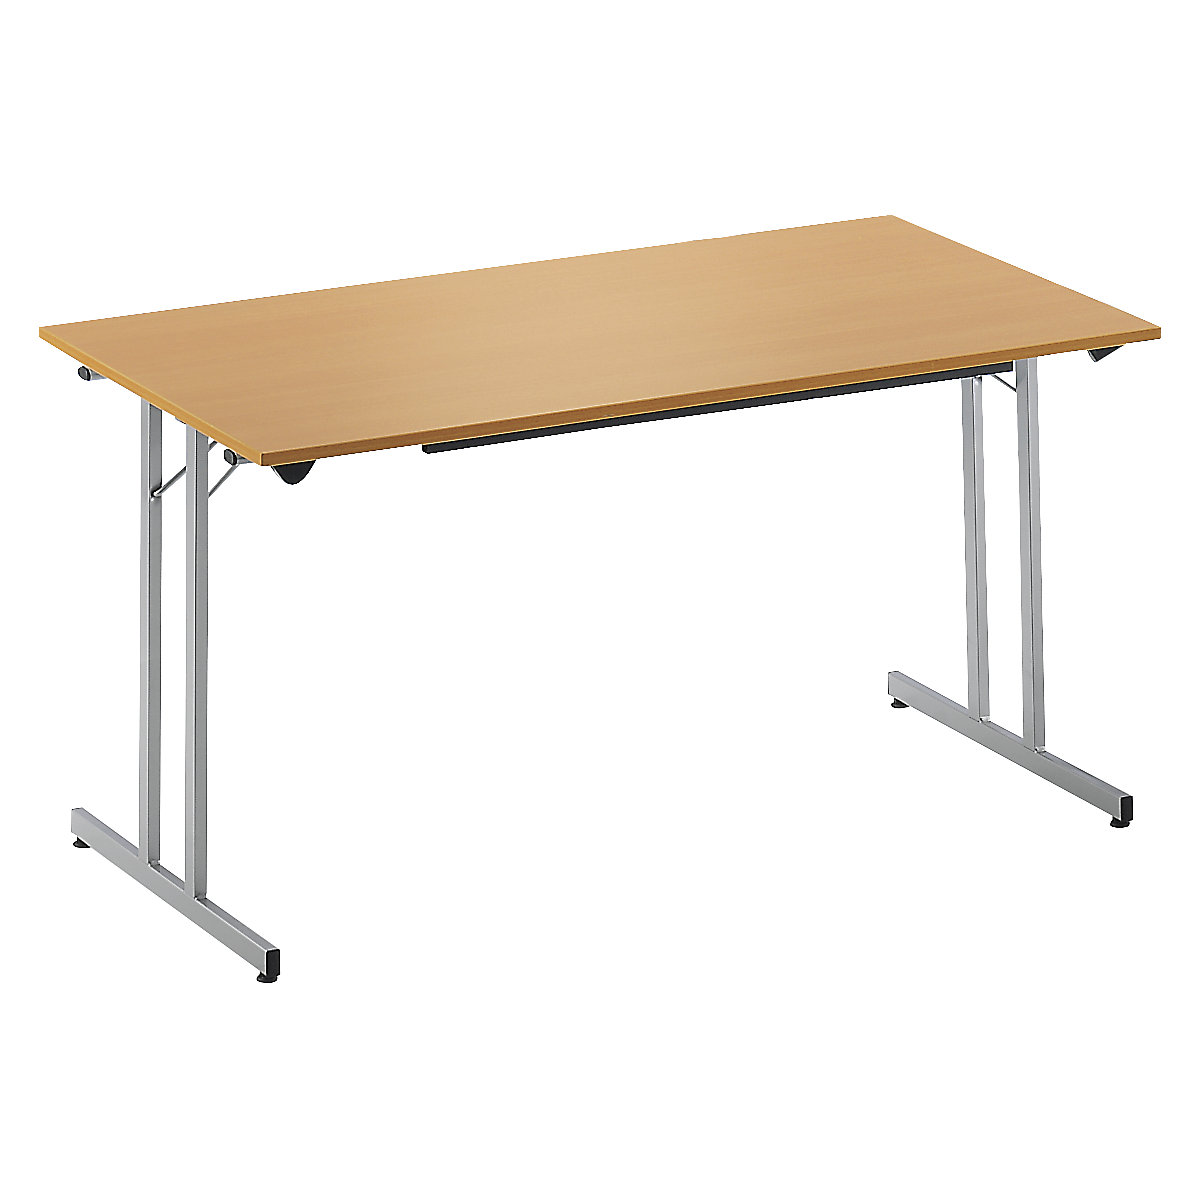 STANDARD folding table, rectangular frame with height adjustment screws, 1200 x 600 mm, aluminium coloured frame, beech finish tabletop-3